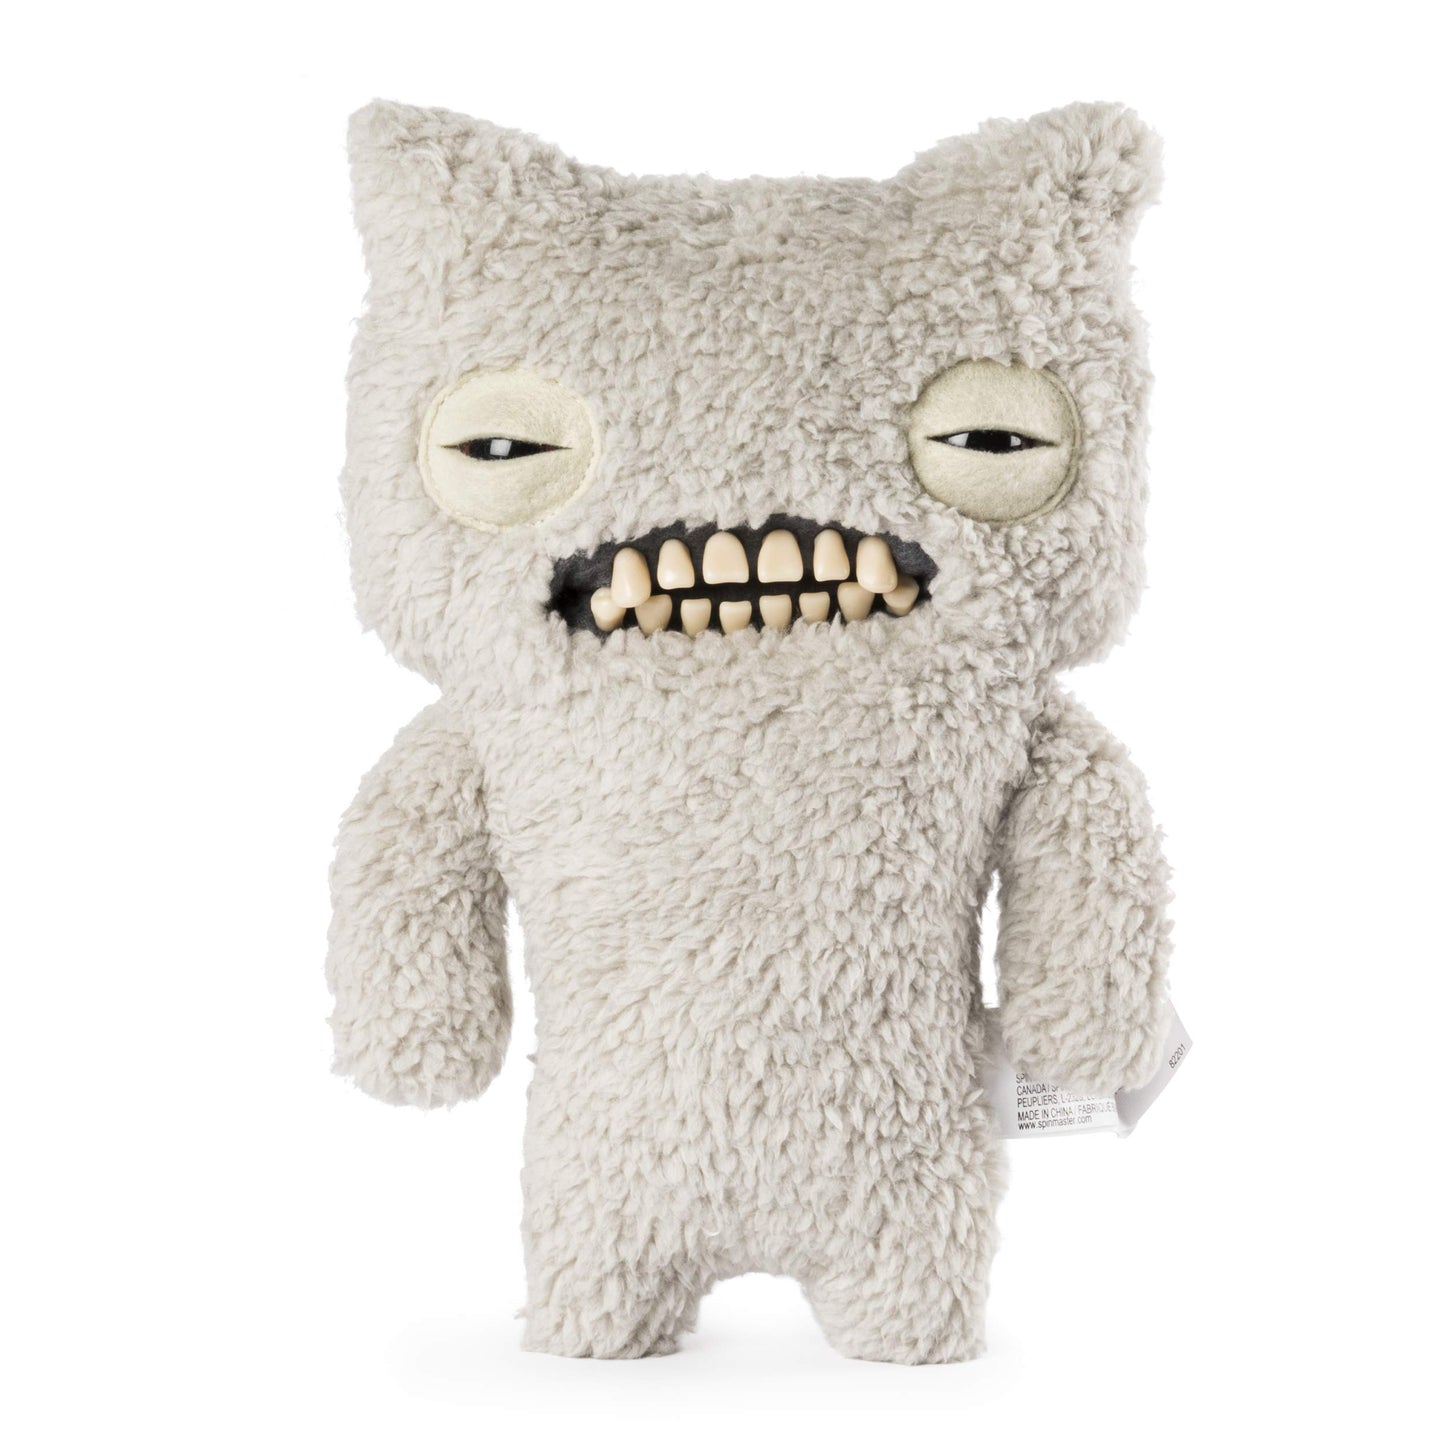 Fugglers Funny Ugly Monster Deluxe Stuffed Animal Medium 9" Plush (Munch Munch)